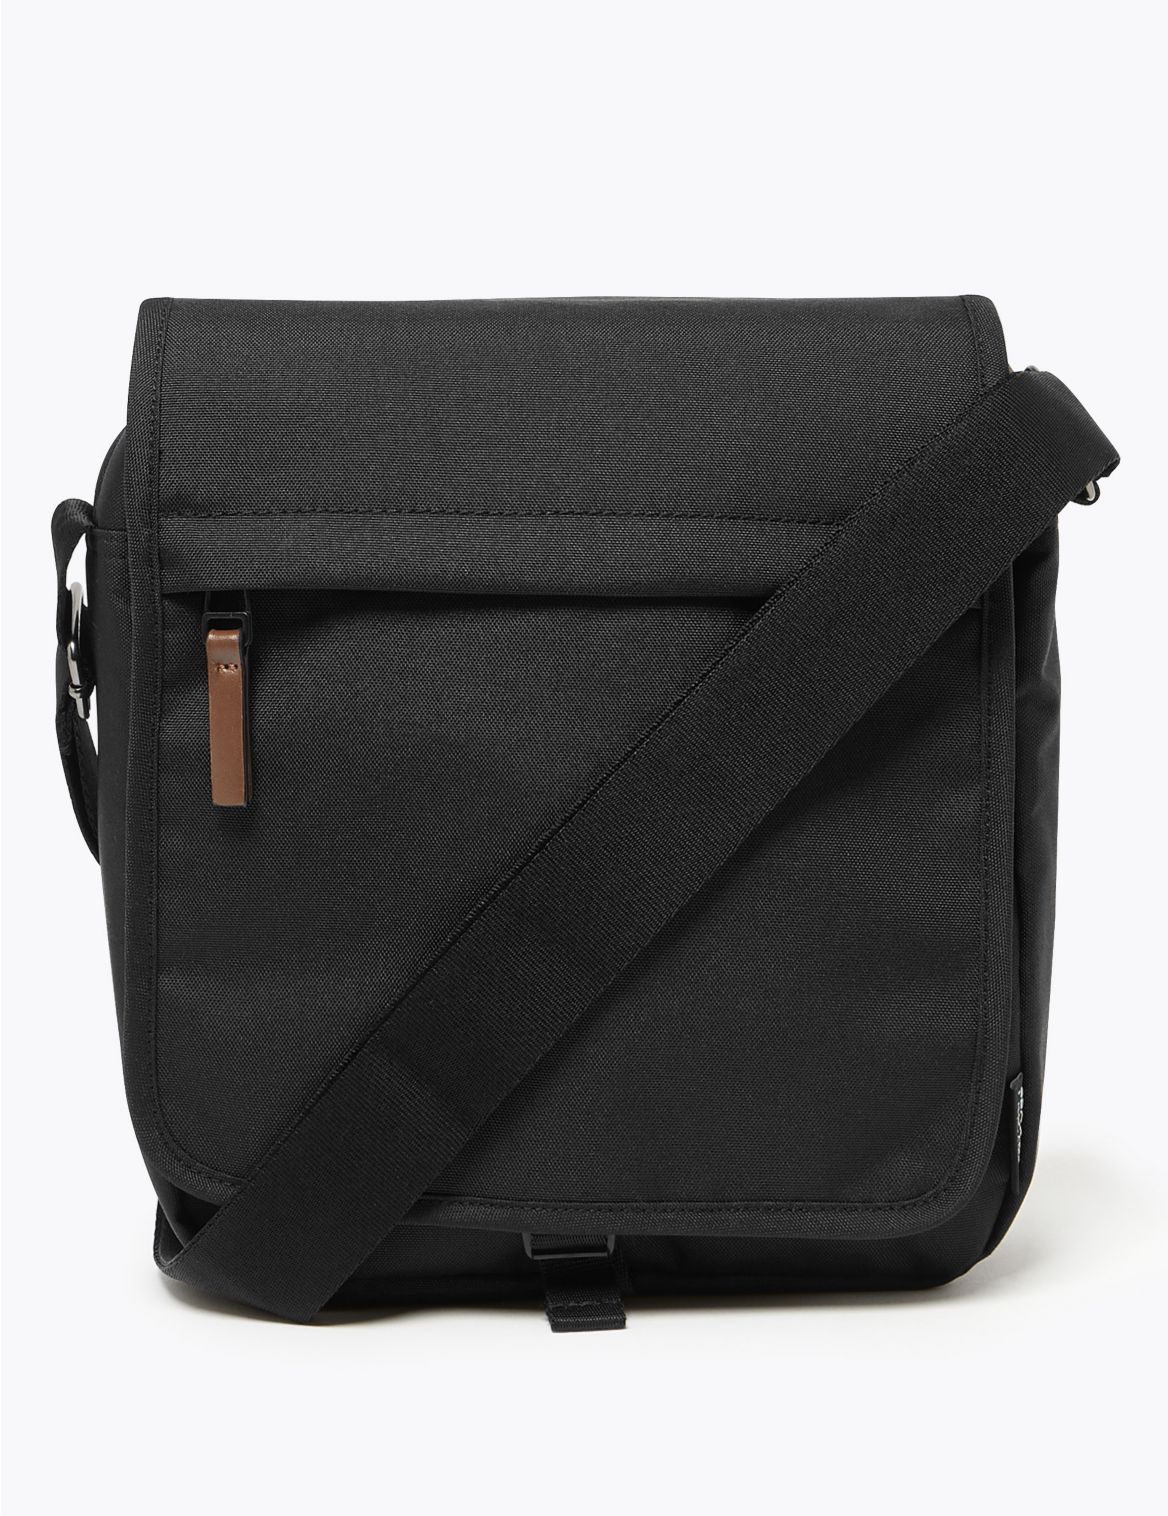 Pro-Tect&trade; Cross Body Bag black